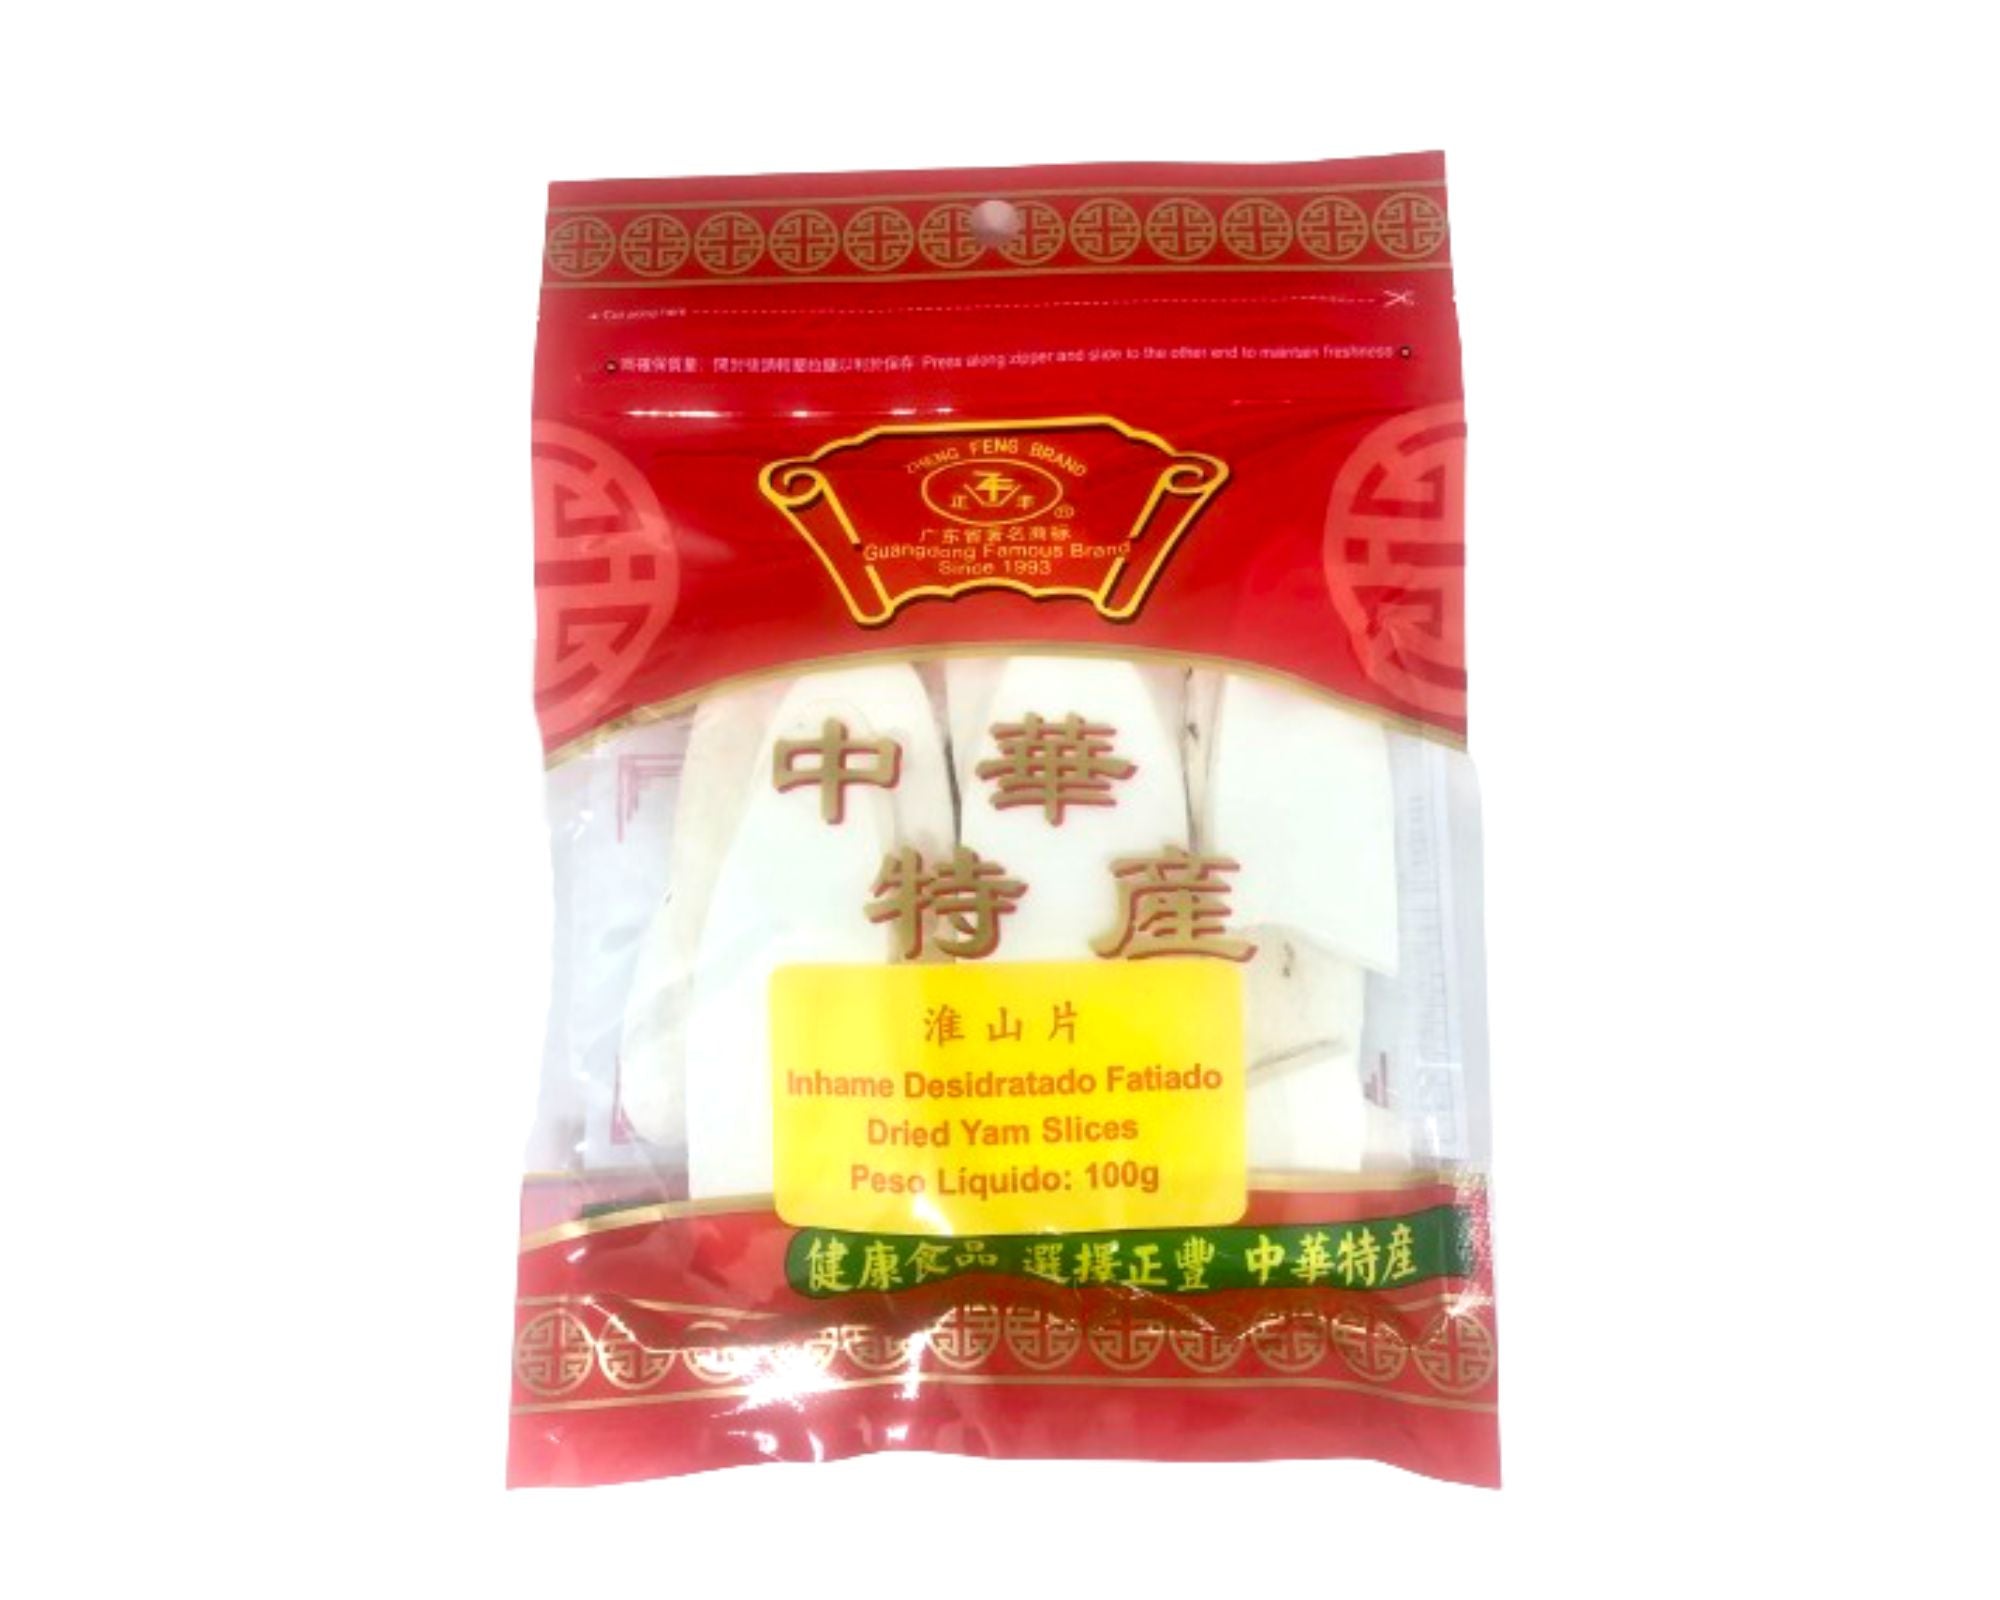 Chá Huai Sham (Inhame Desidratado) (Dried Yam Slices) - Zheng Feng Brand 100g